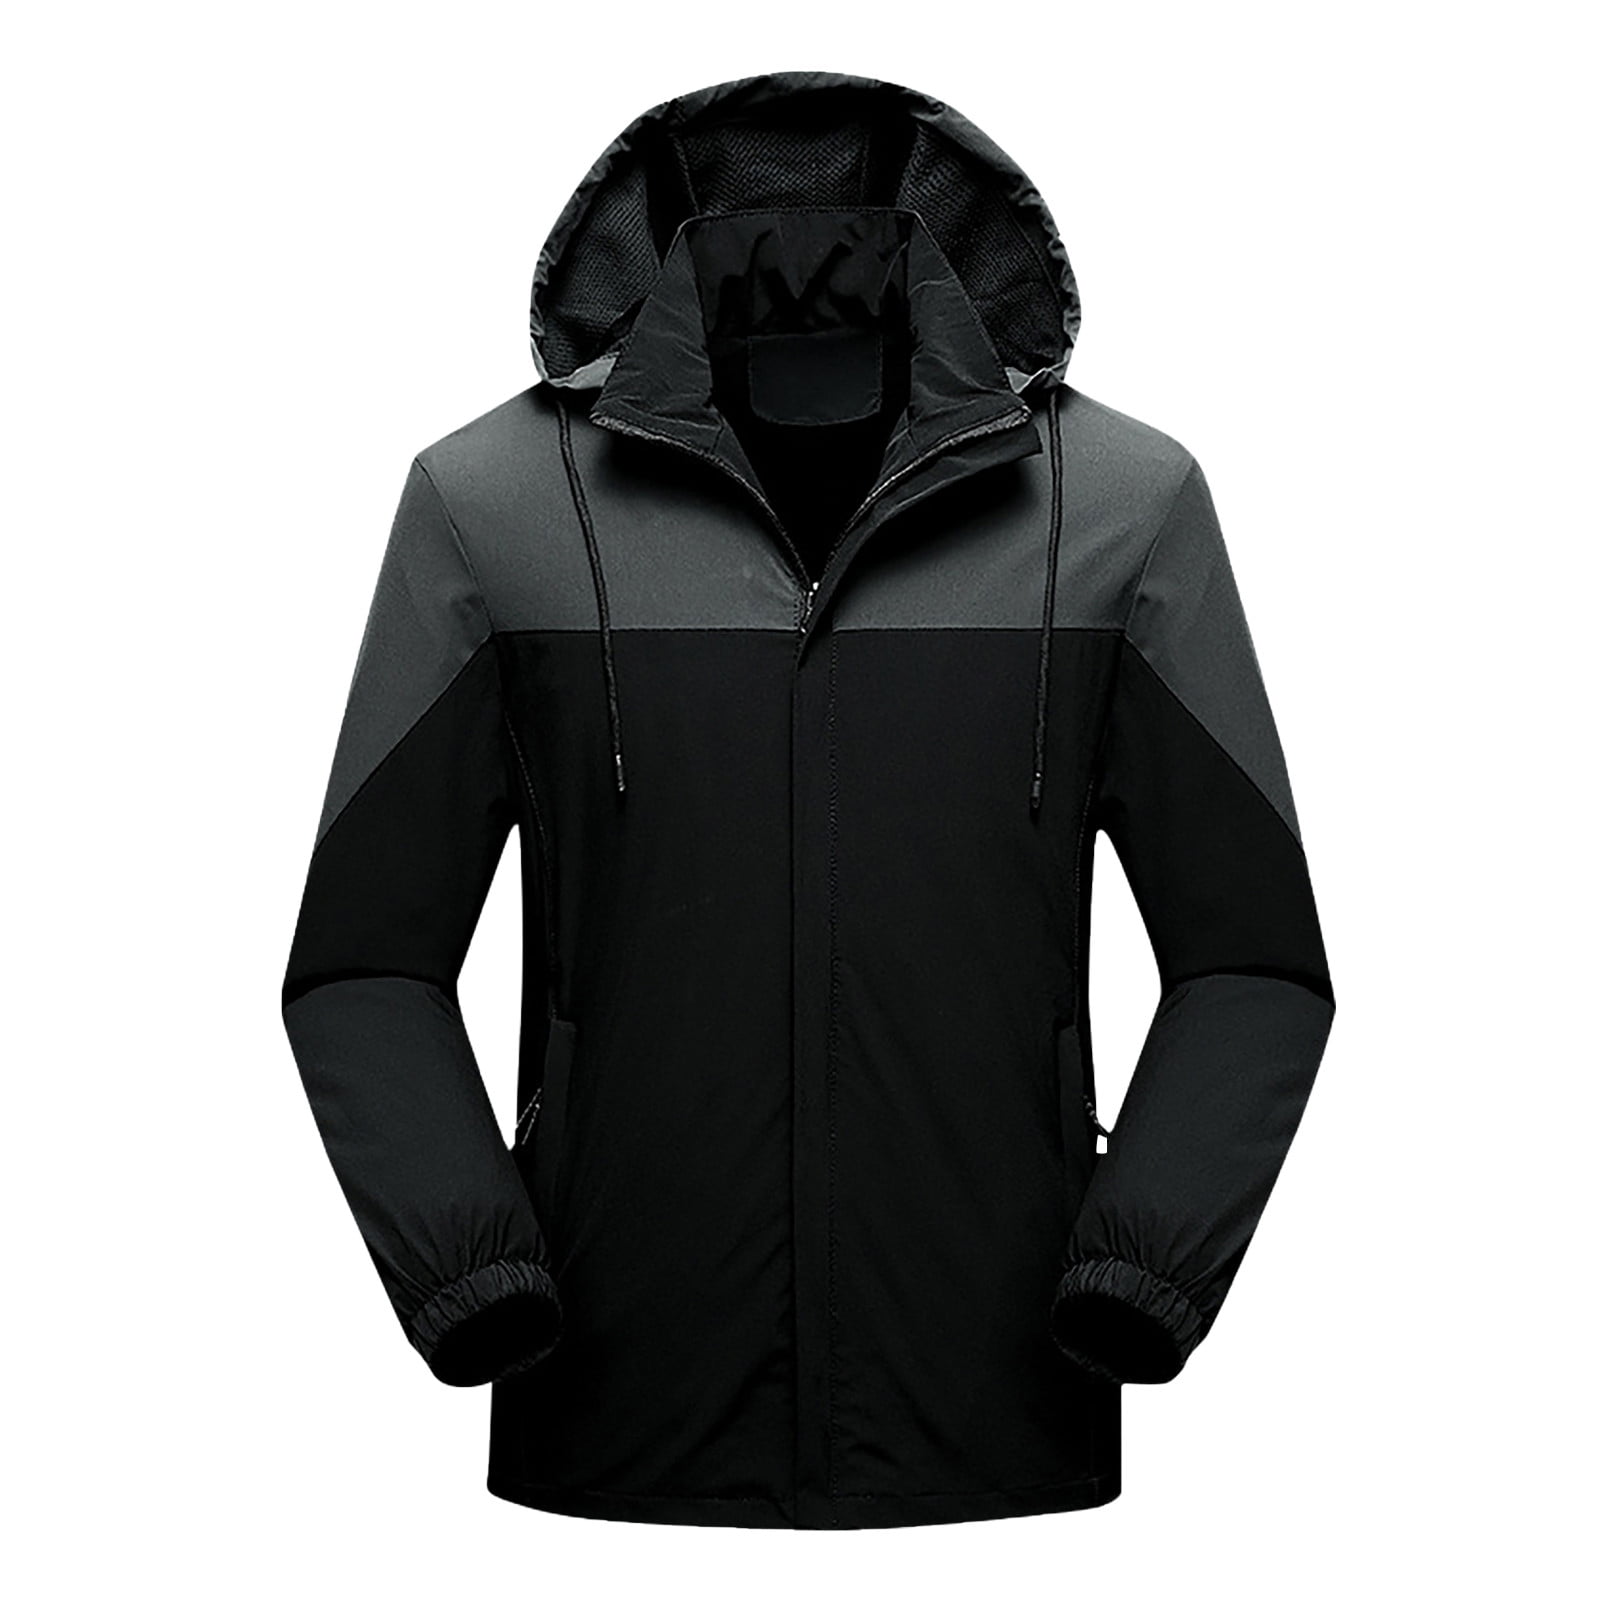 Outdoor Men's Rain Jacket Waterproof Lightweight Rain Shell with a